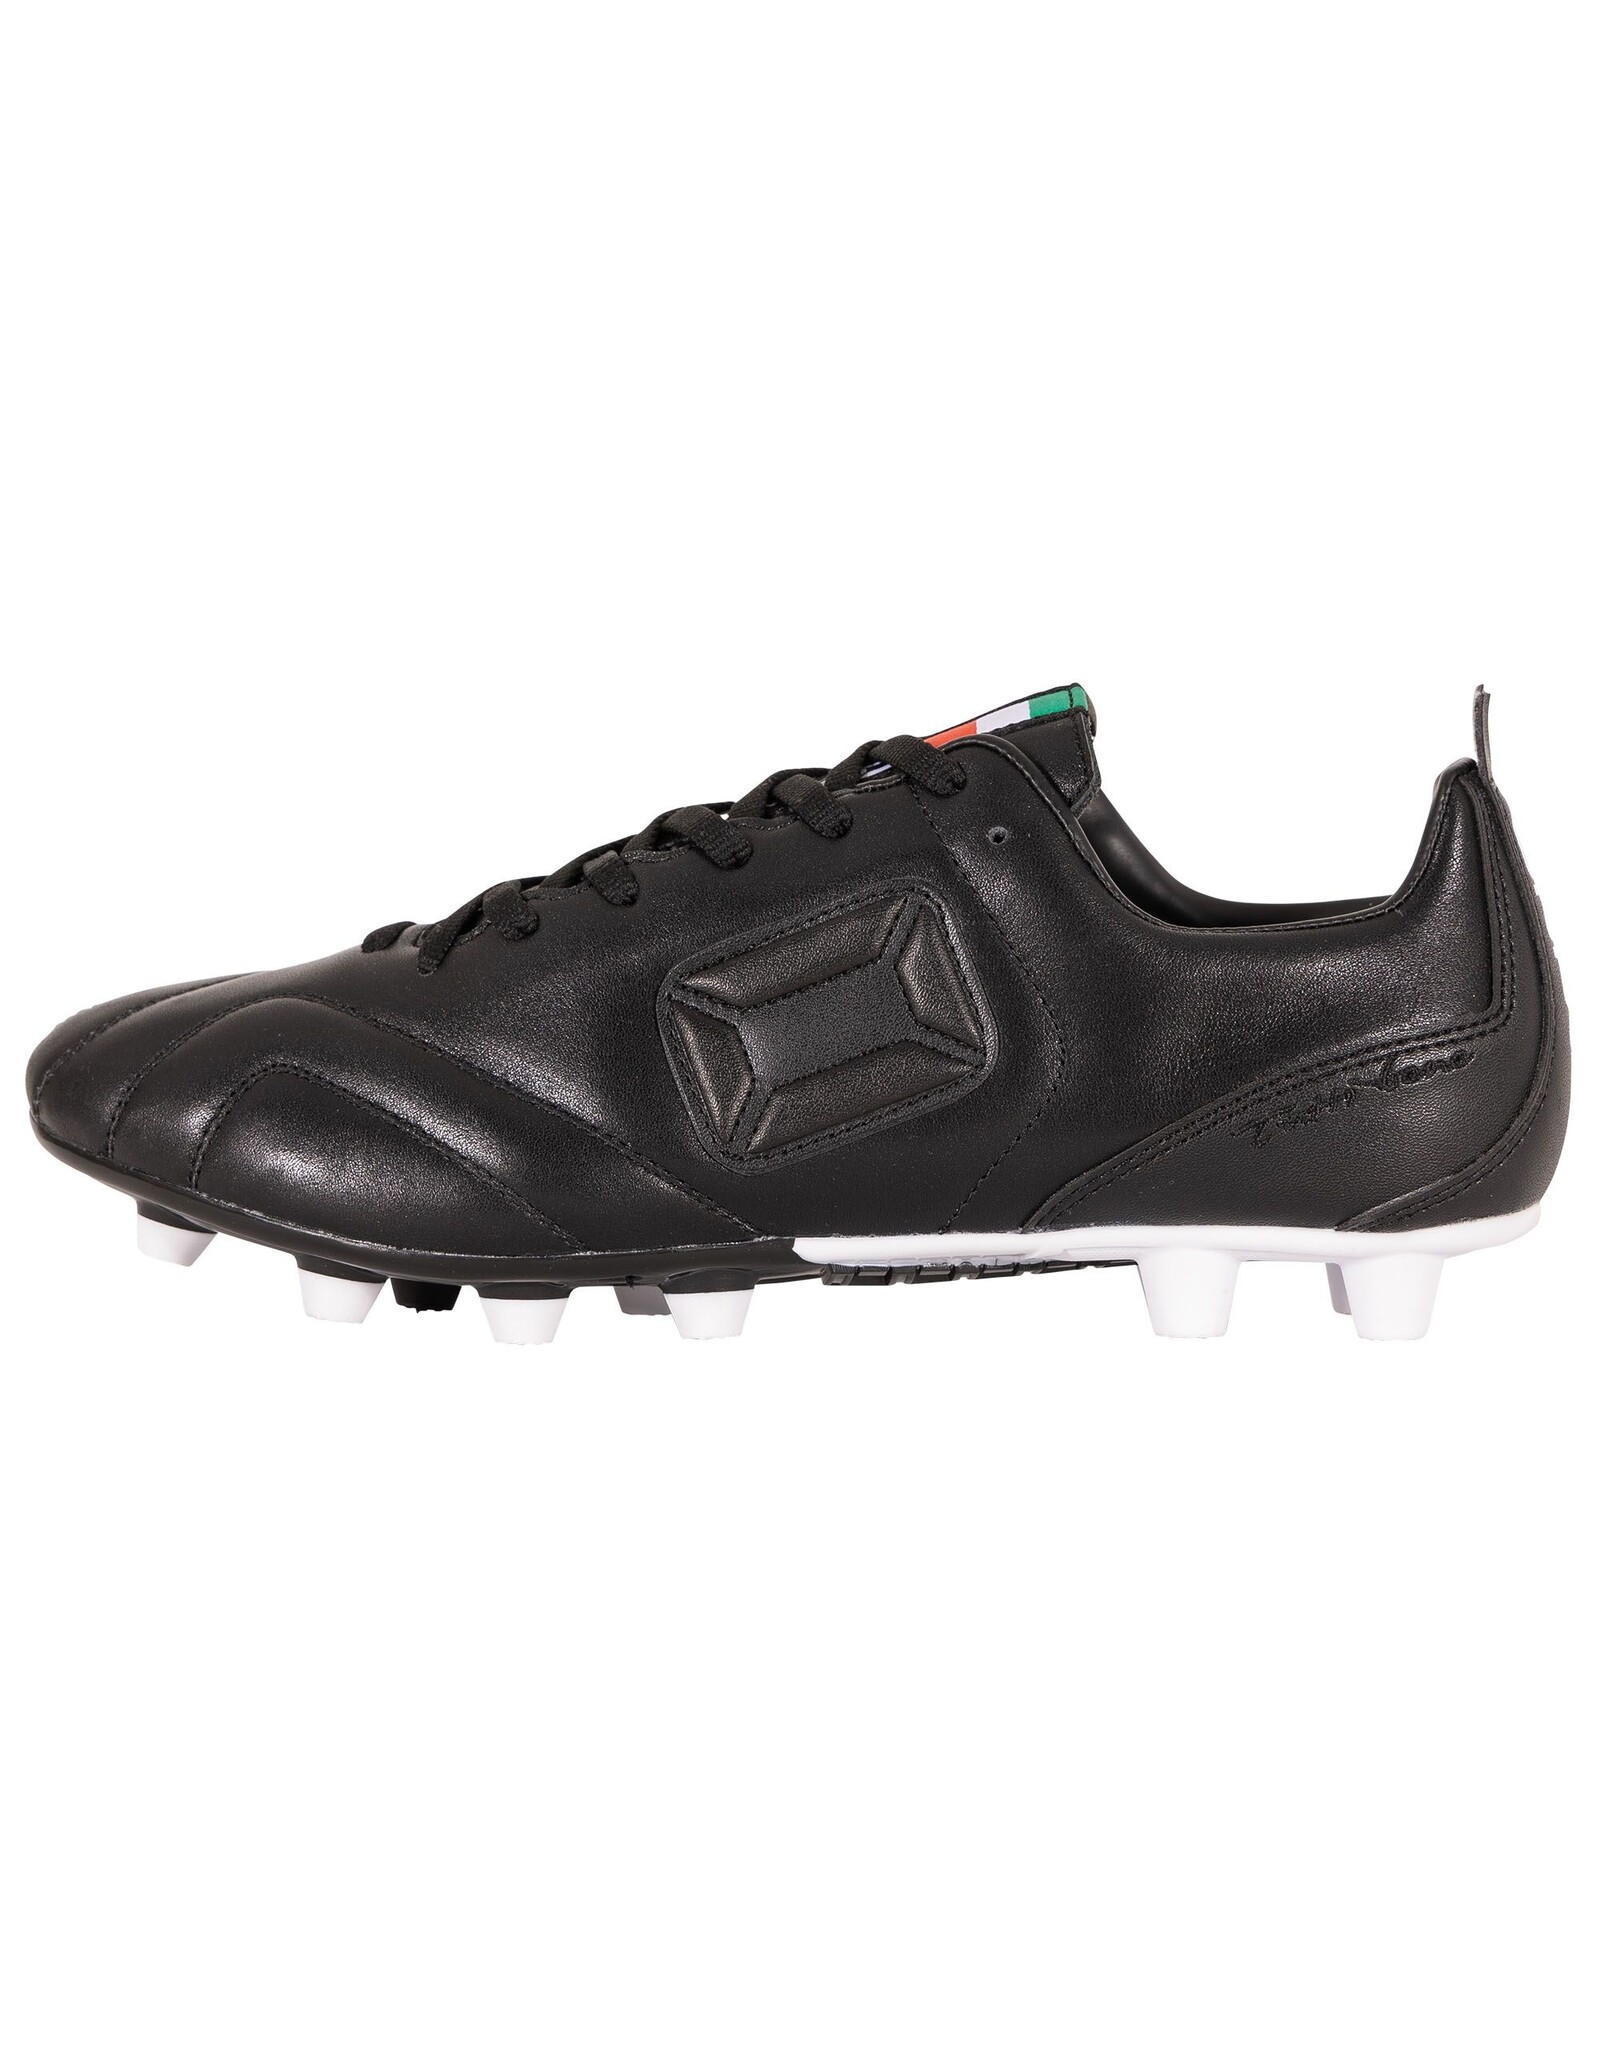 Stanno Nibbio Nero Firm Ground Football Shoes-Black